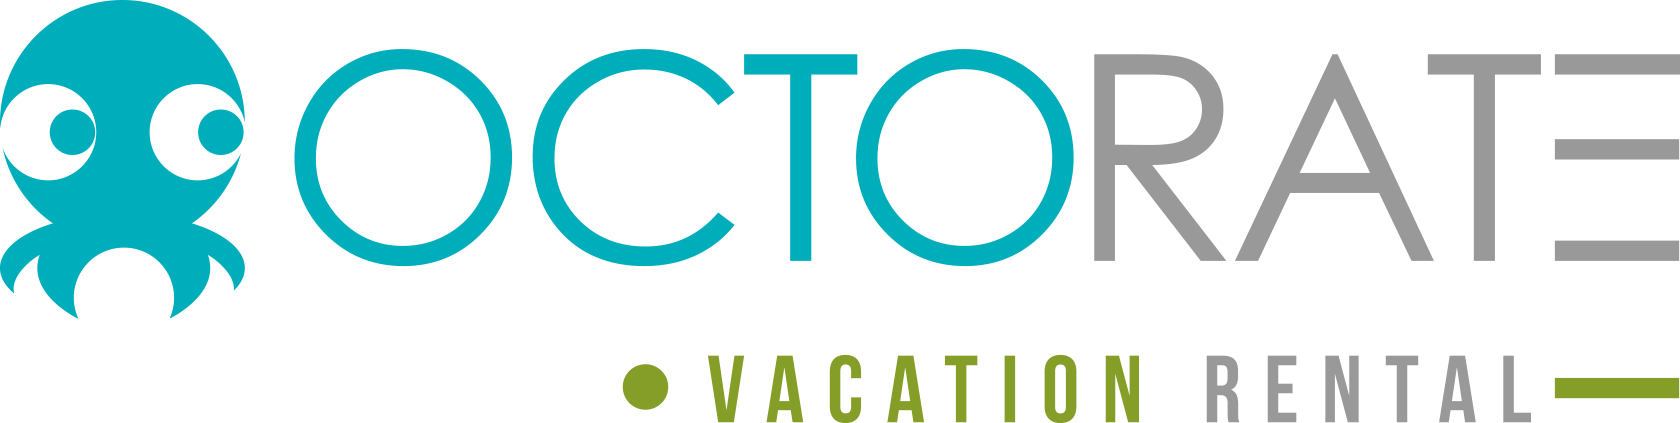 Octorate Vacation Rental